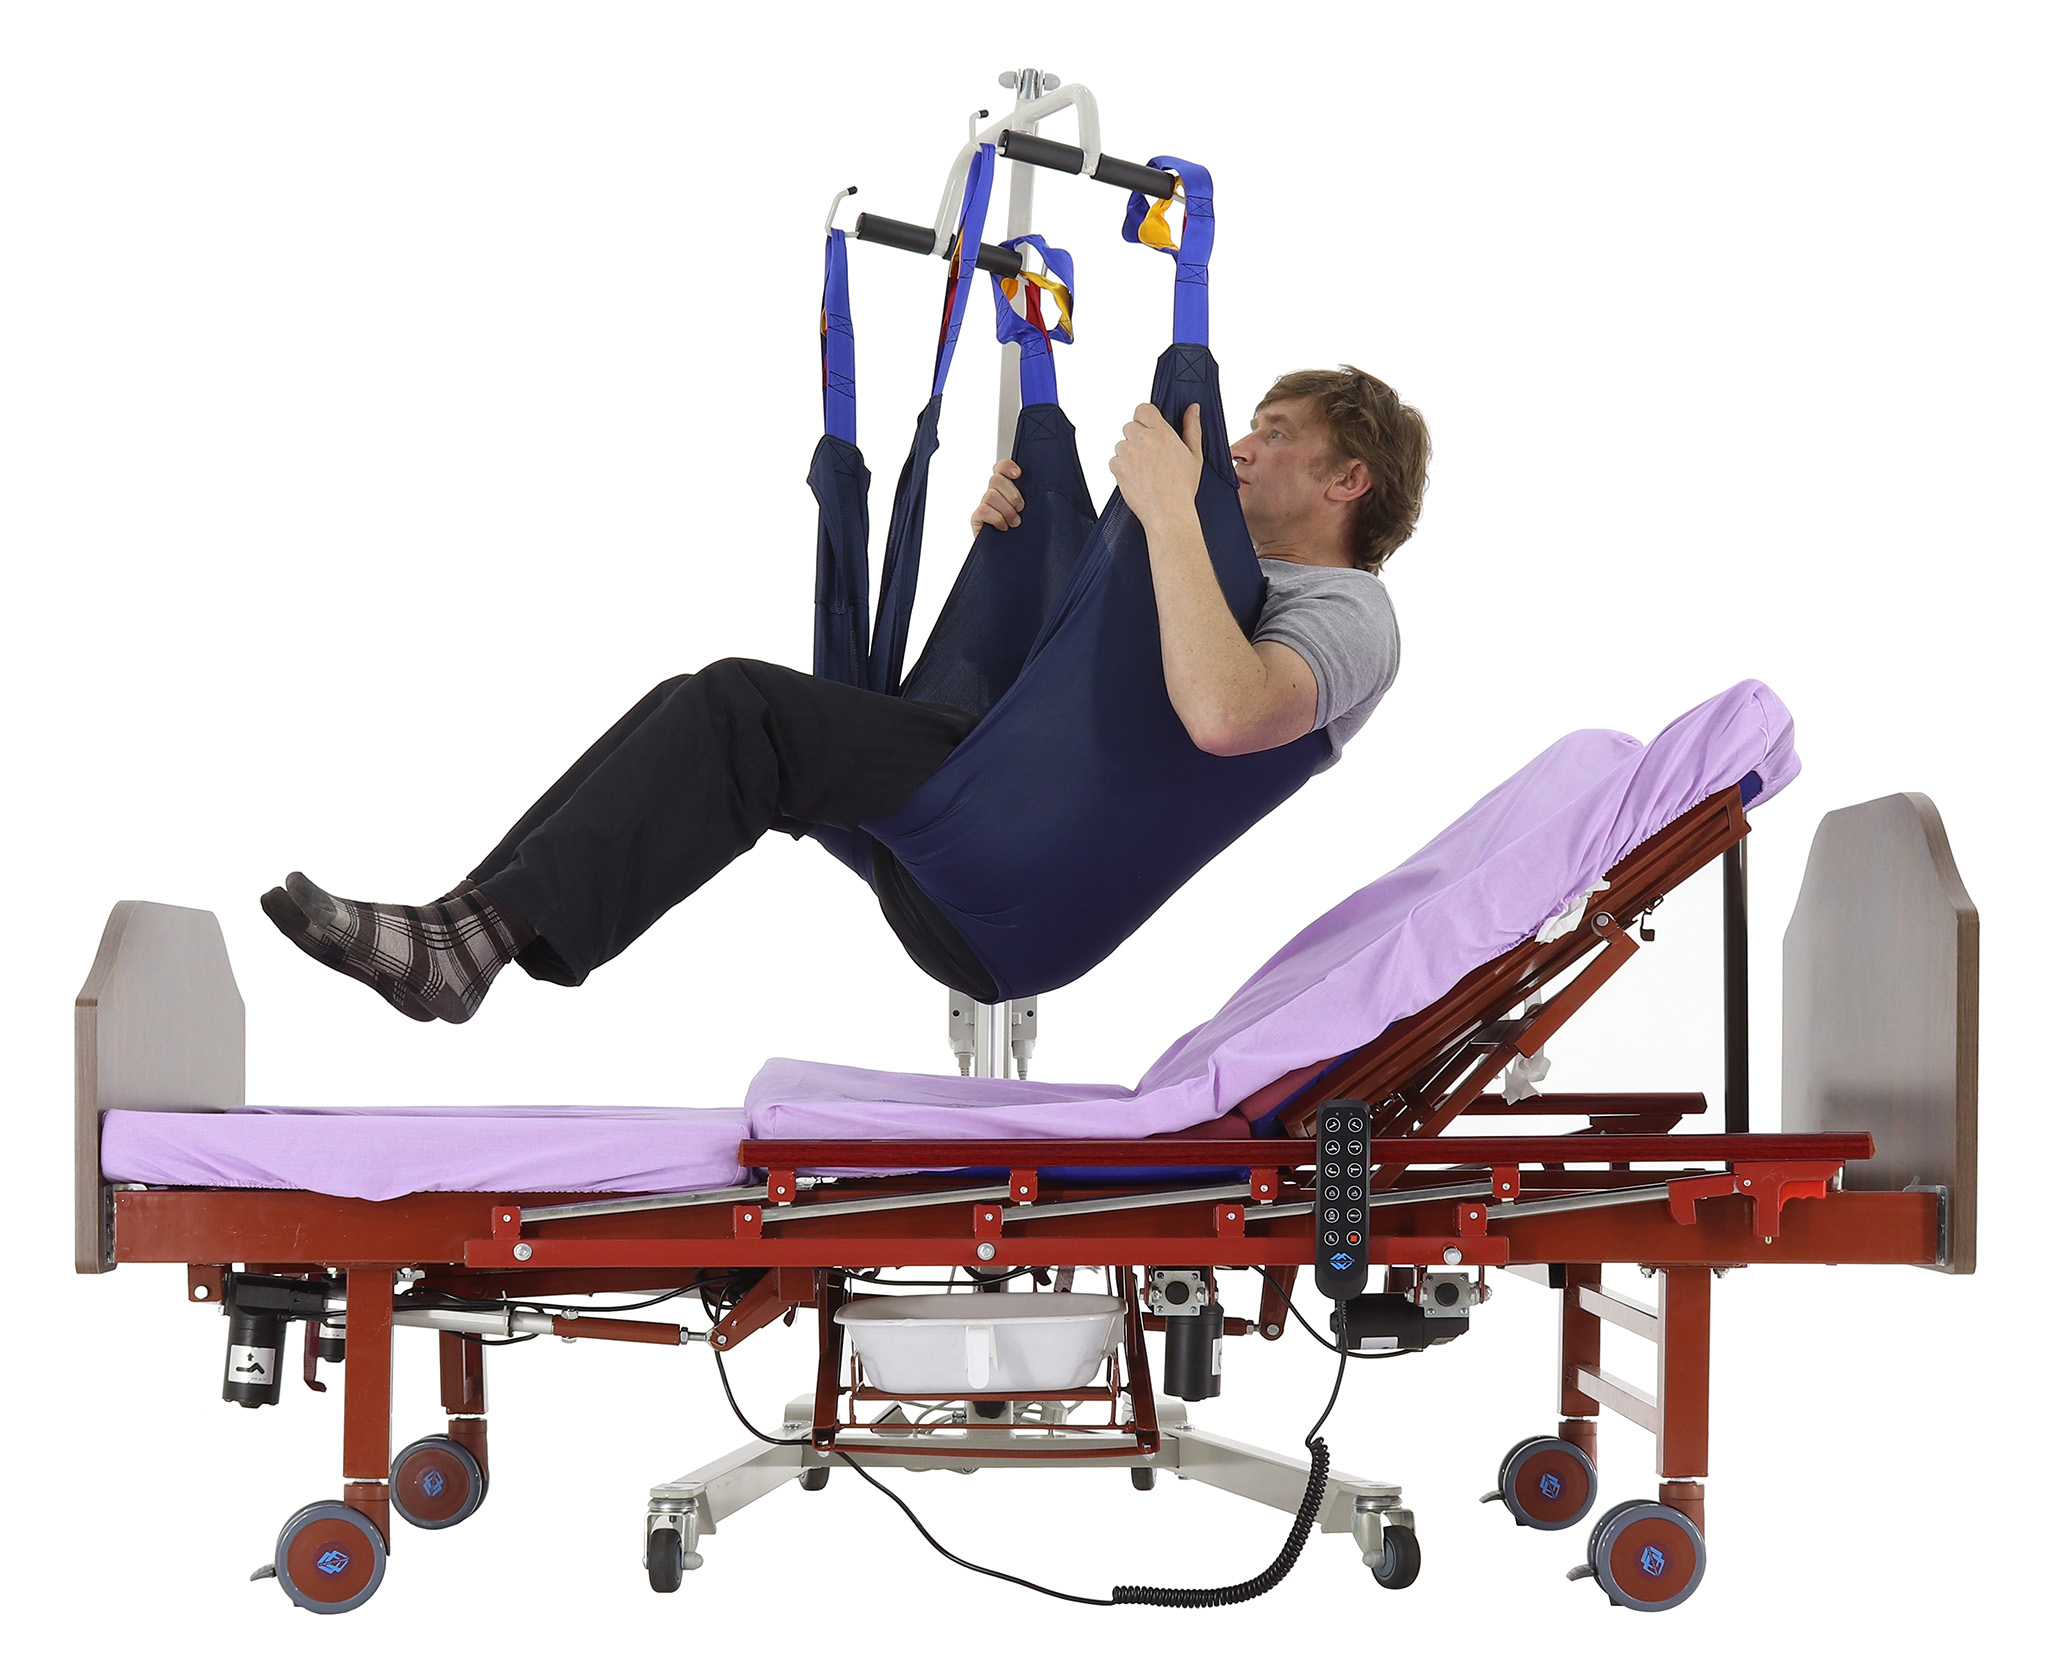 алгоритм перемещения пациента с кровати на стул